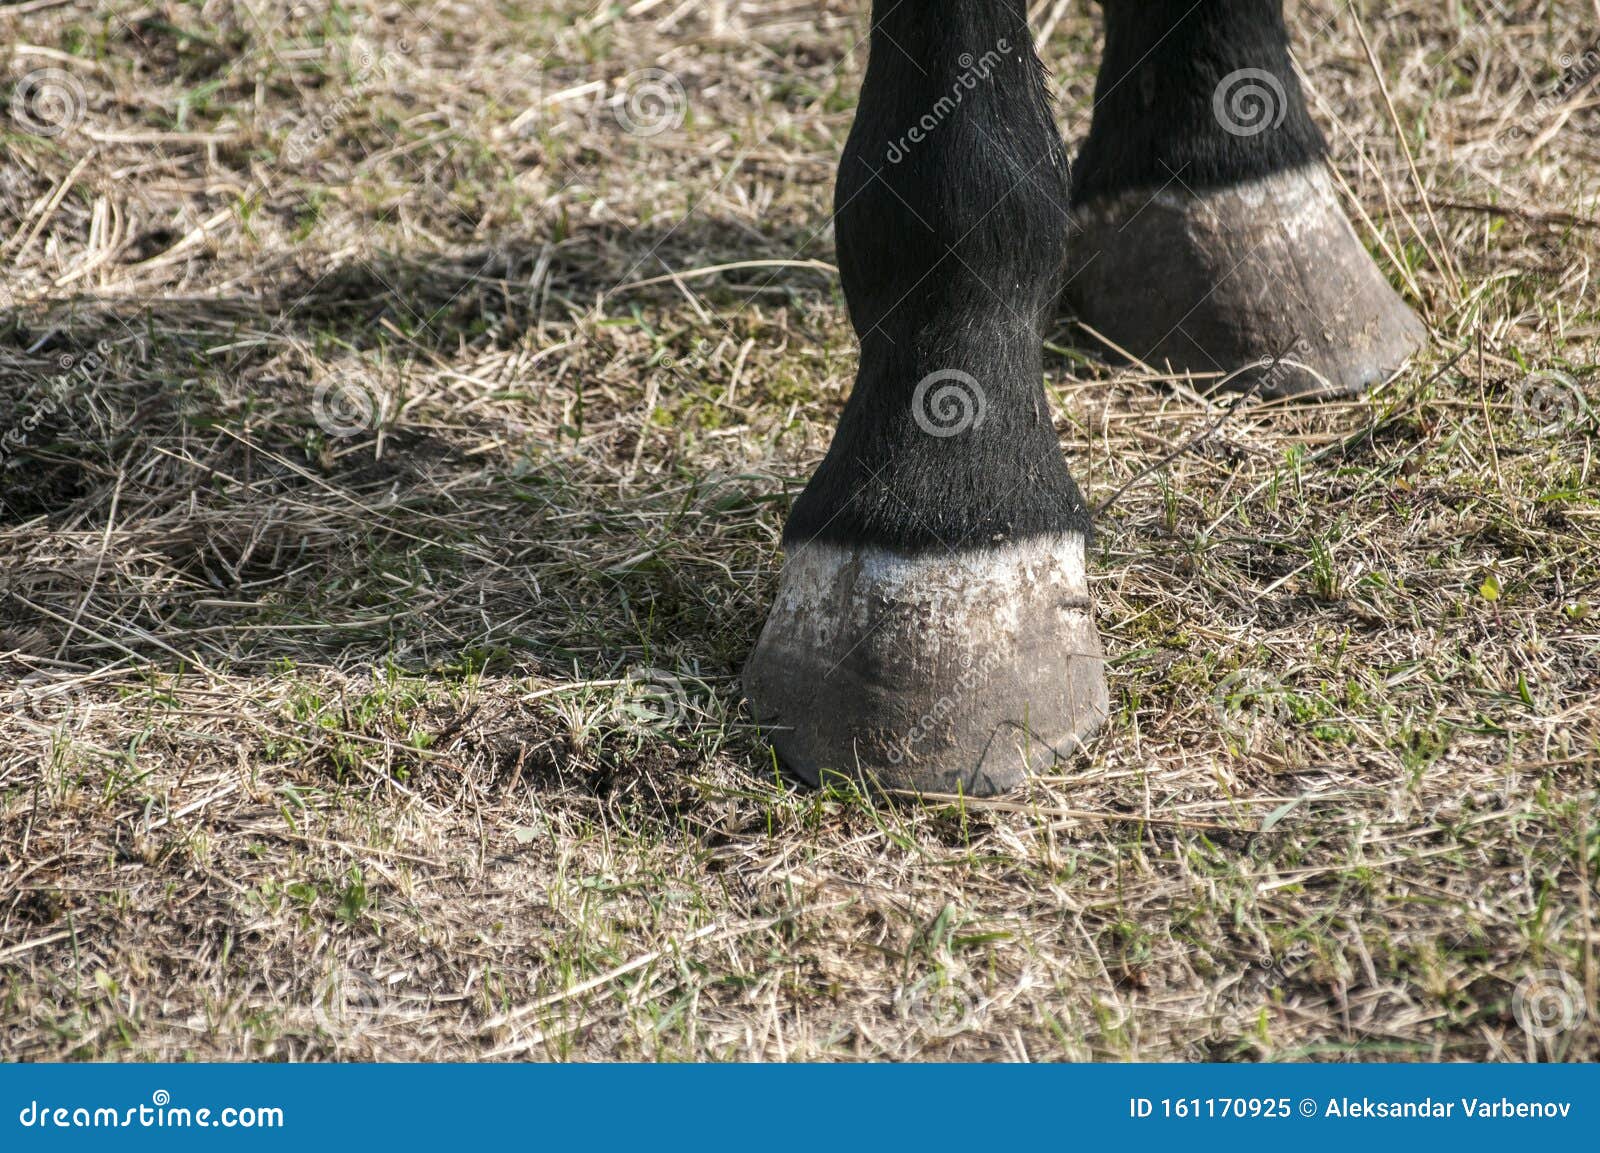 horse hoofs closeup